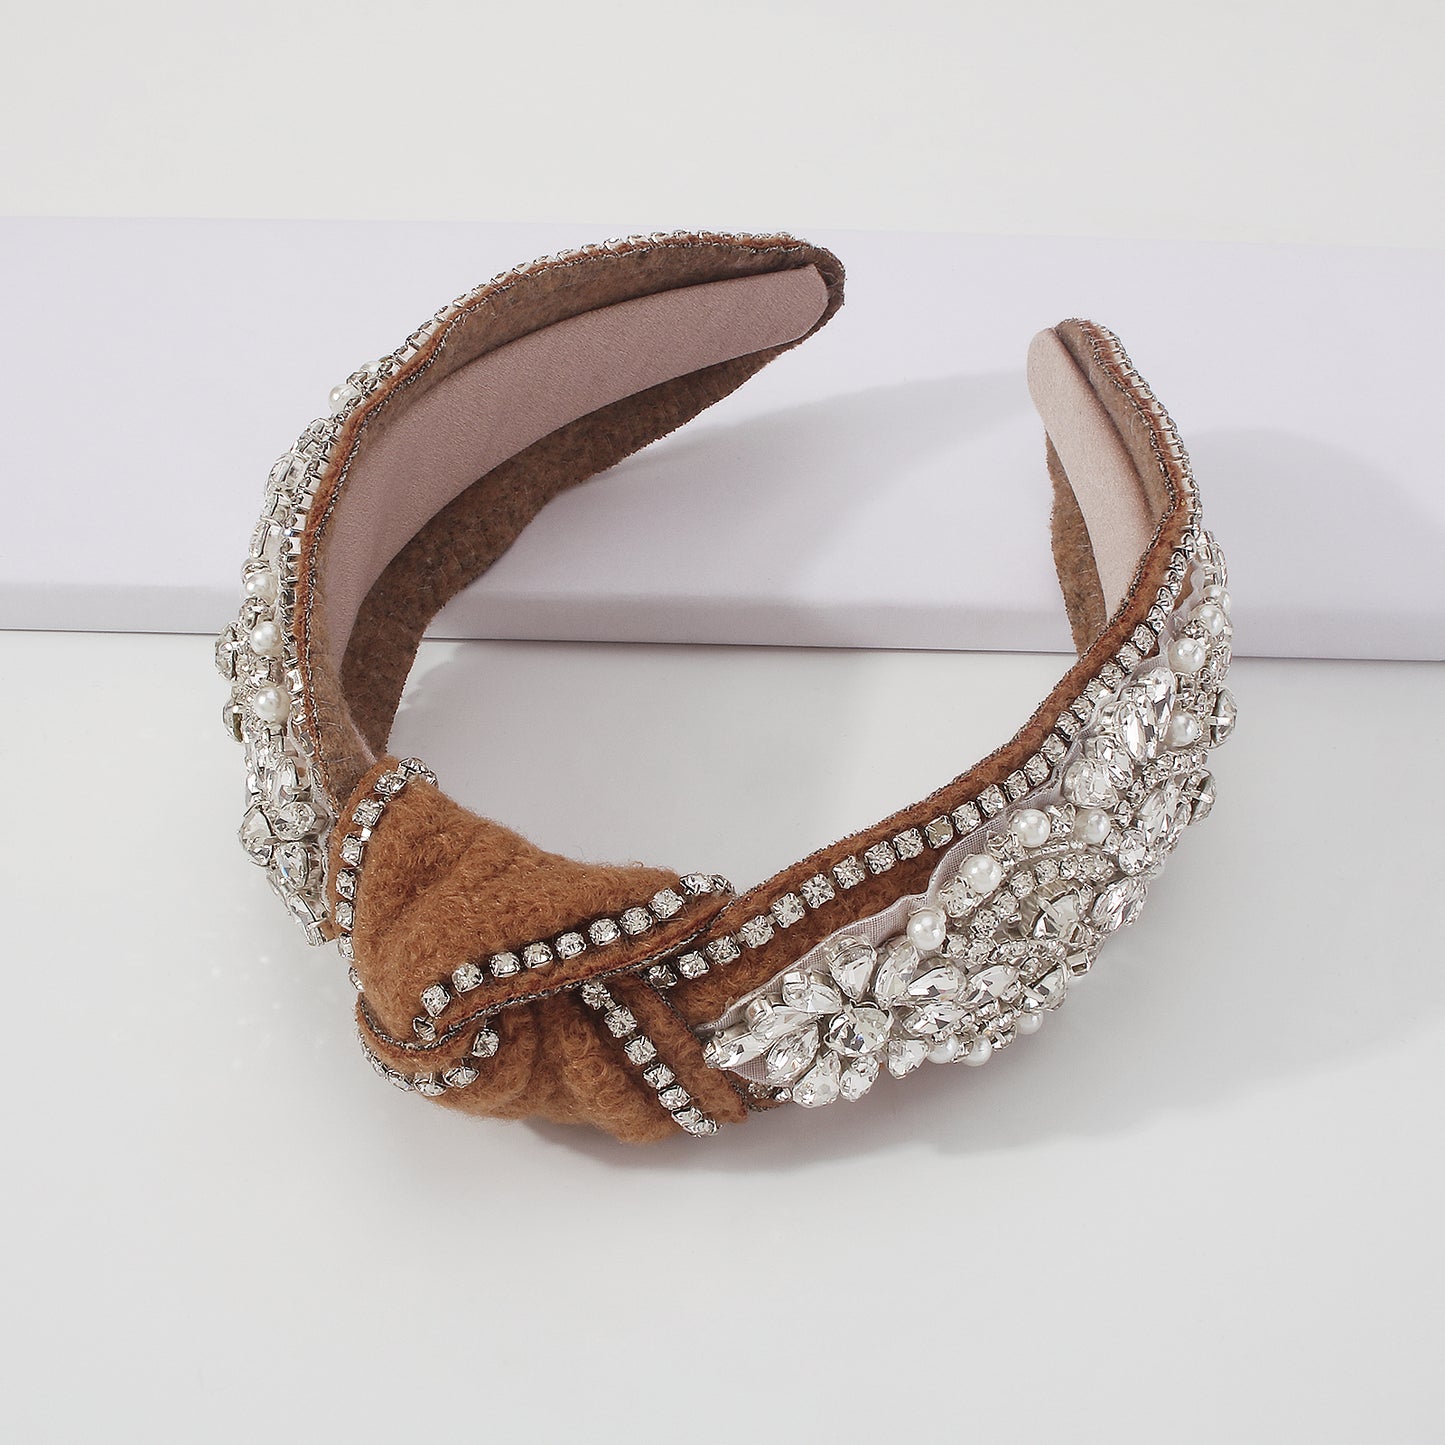 New Winter Felt Full Rhinestone Topknot Headband medyjewelry